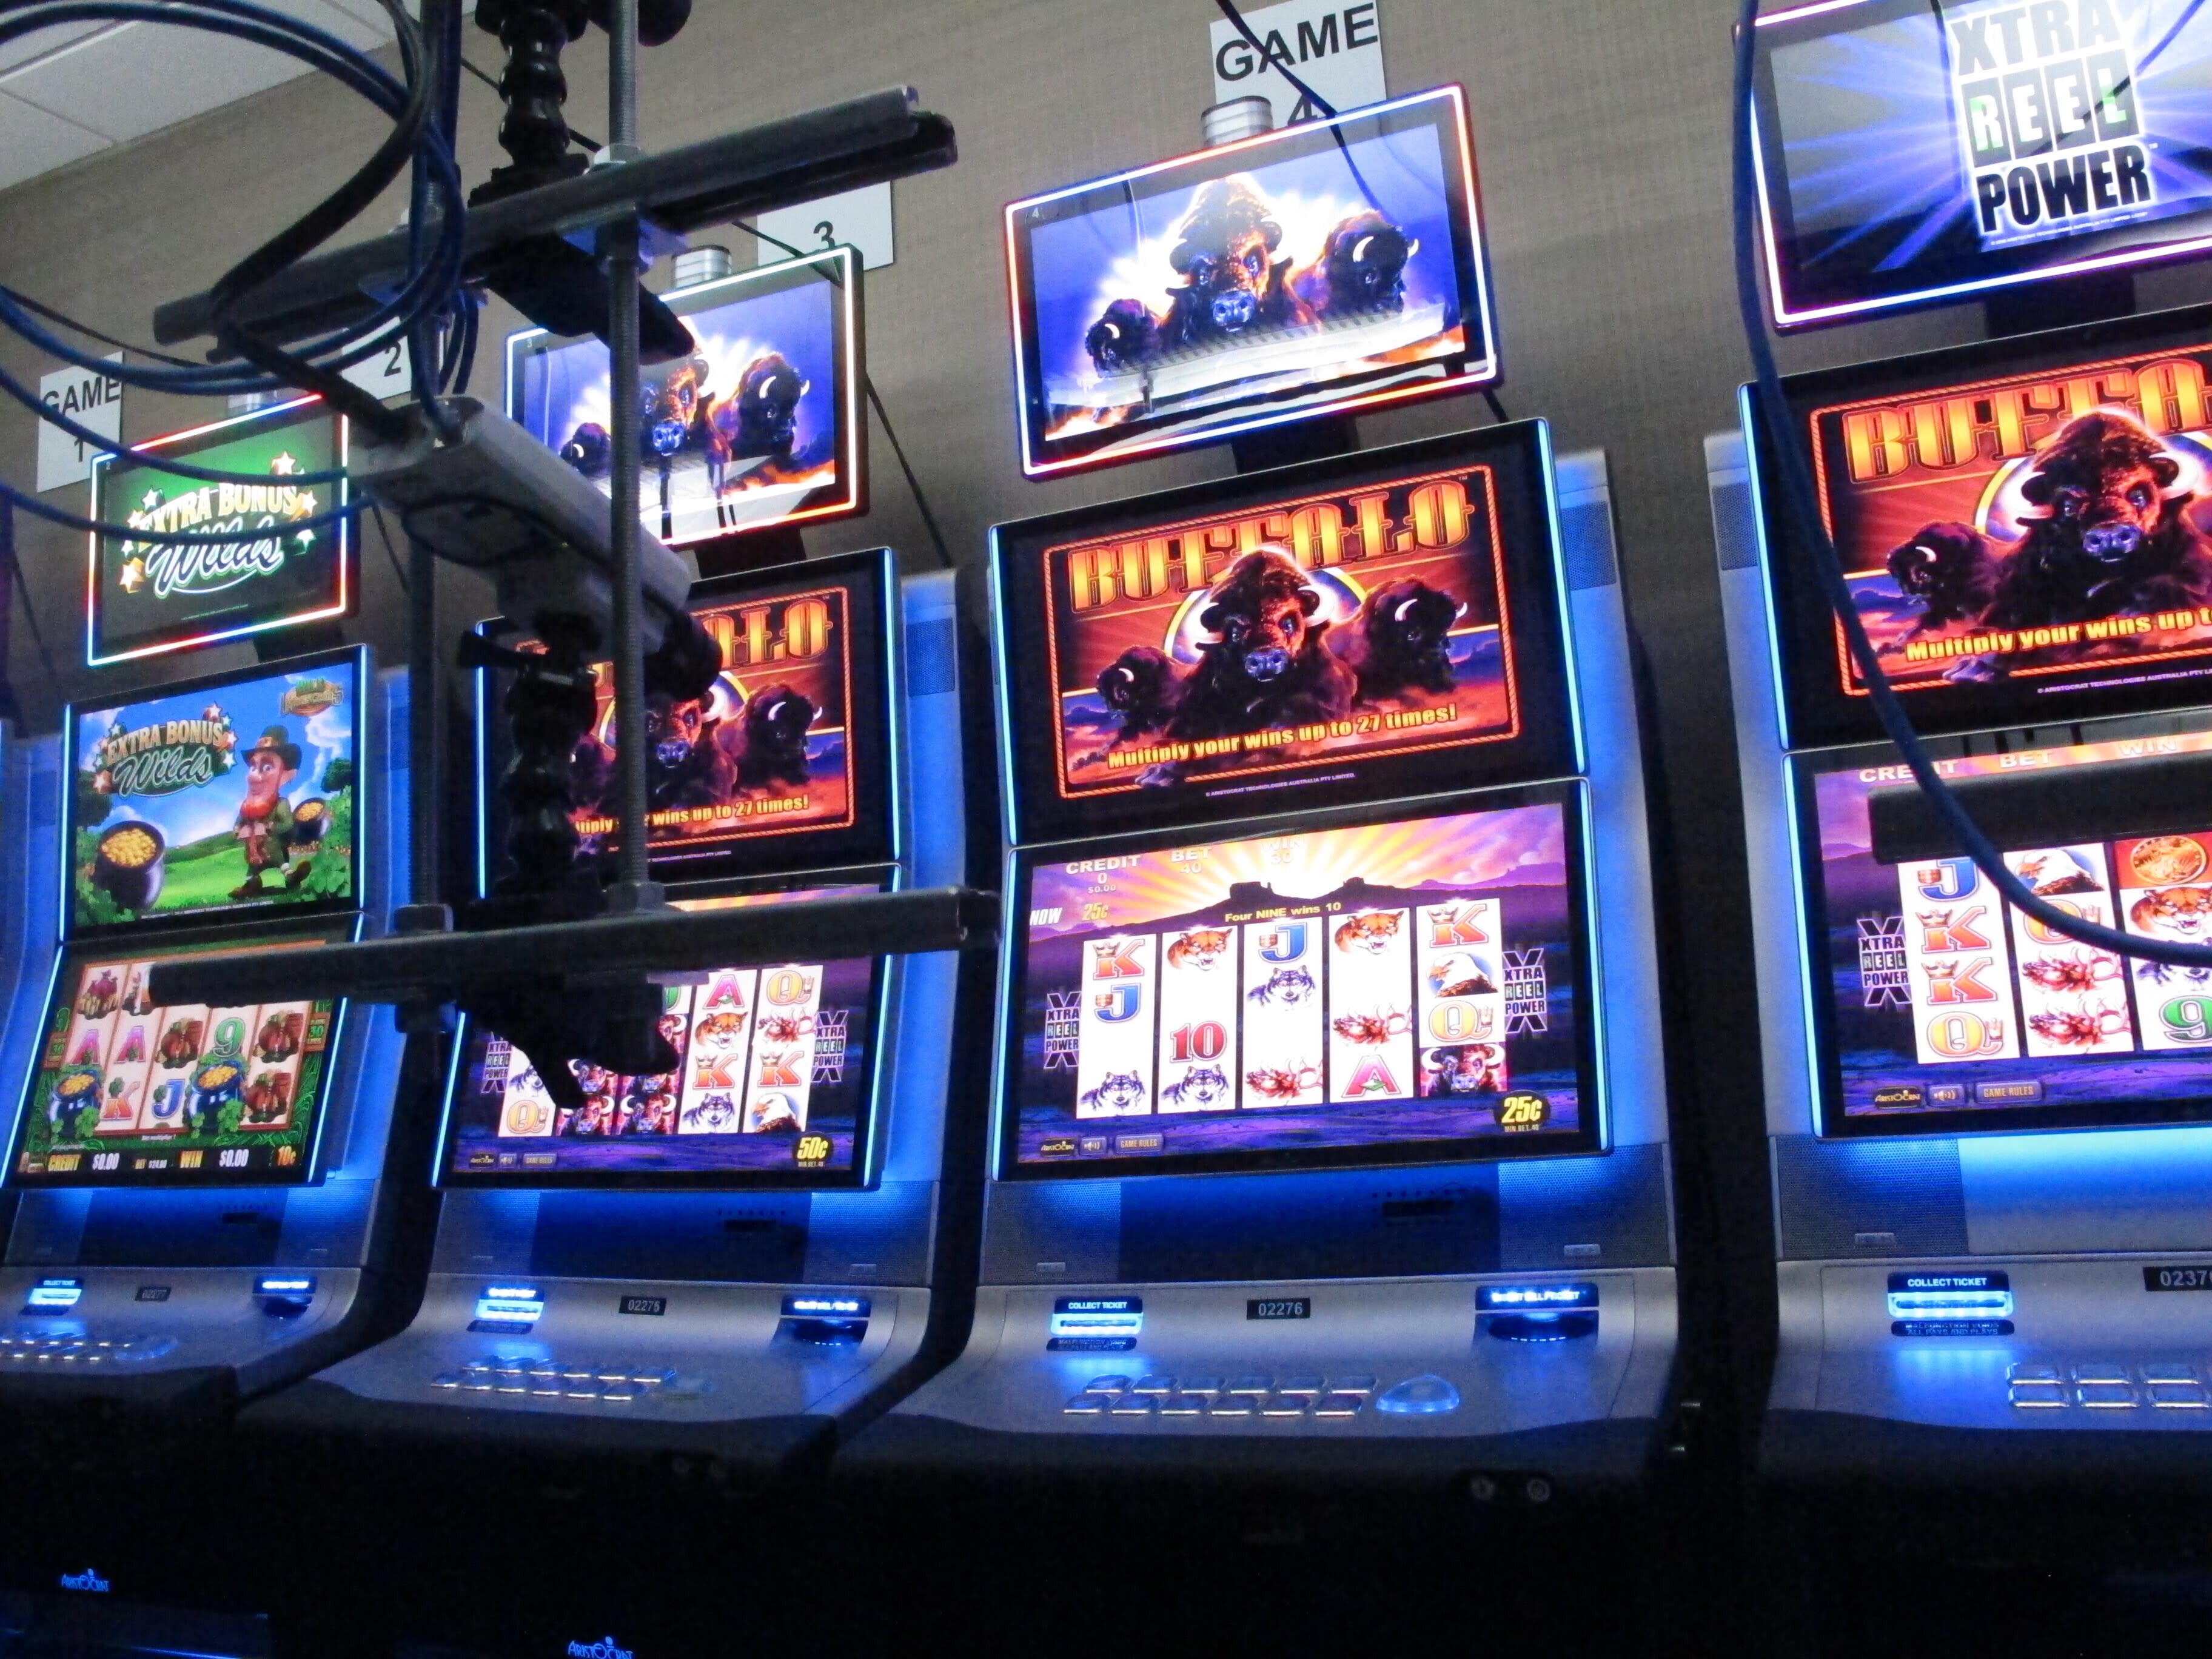 Flux Slot Machine Gambling